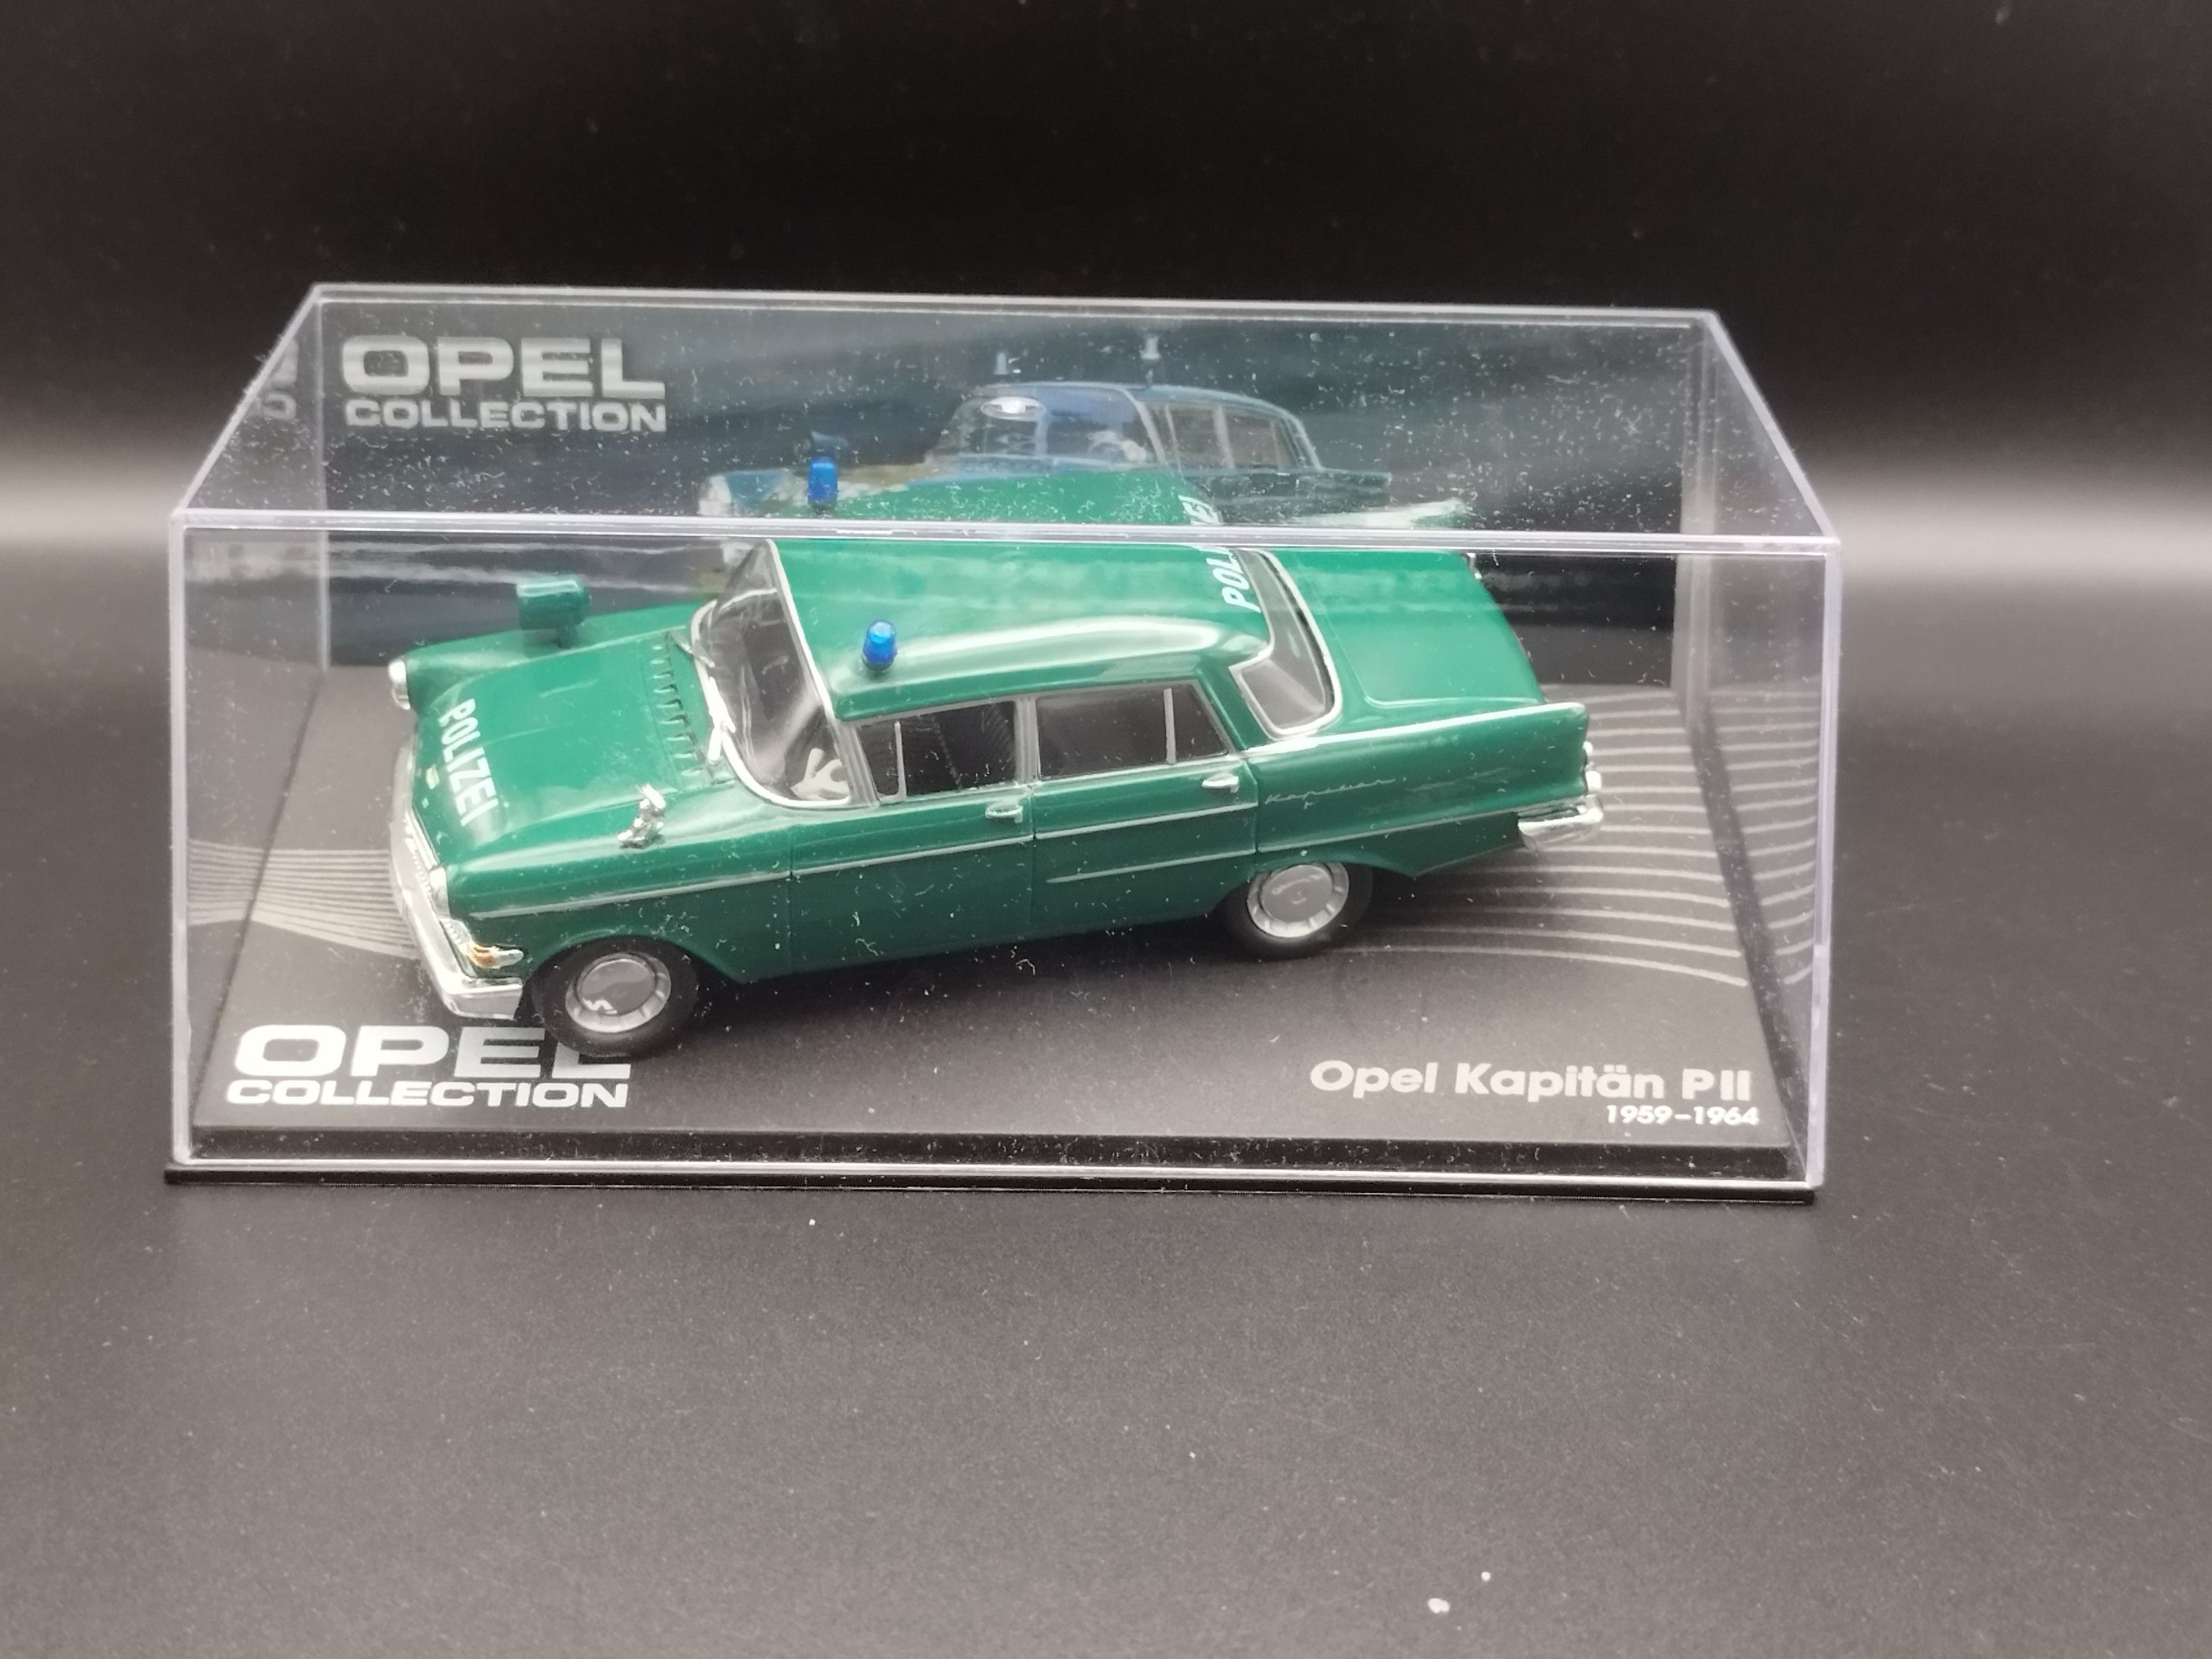 1:43 Opel Collection Opel Kapitan  model używany